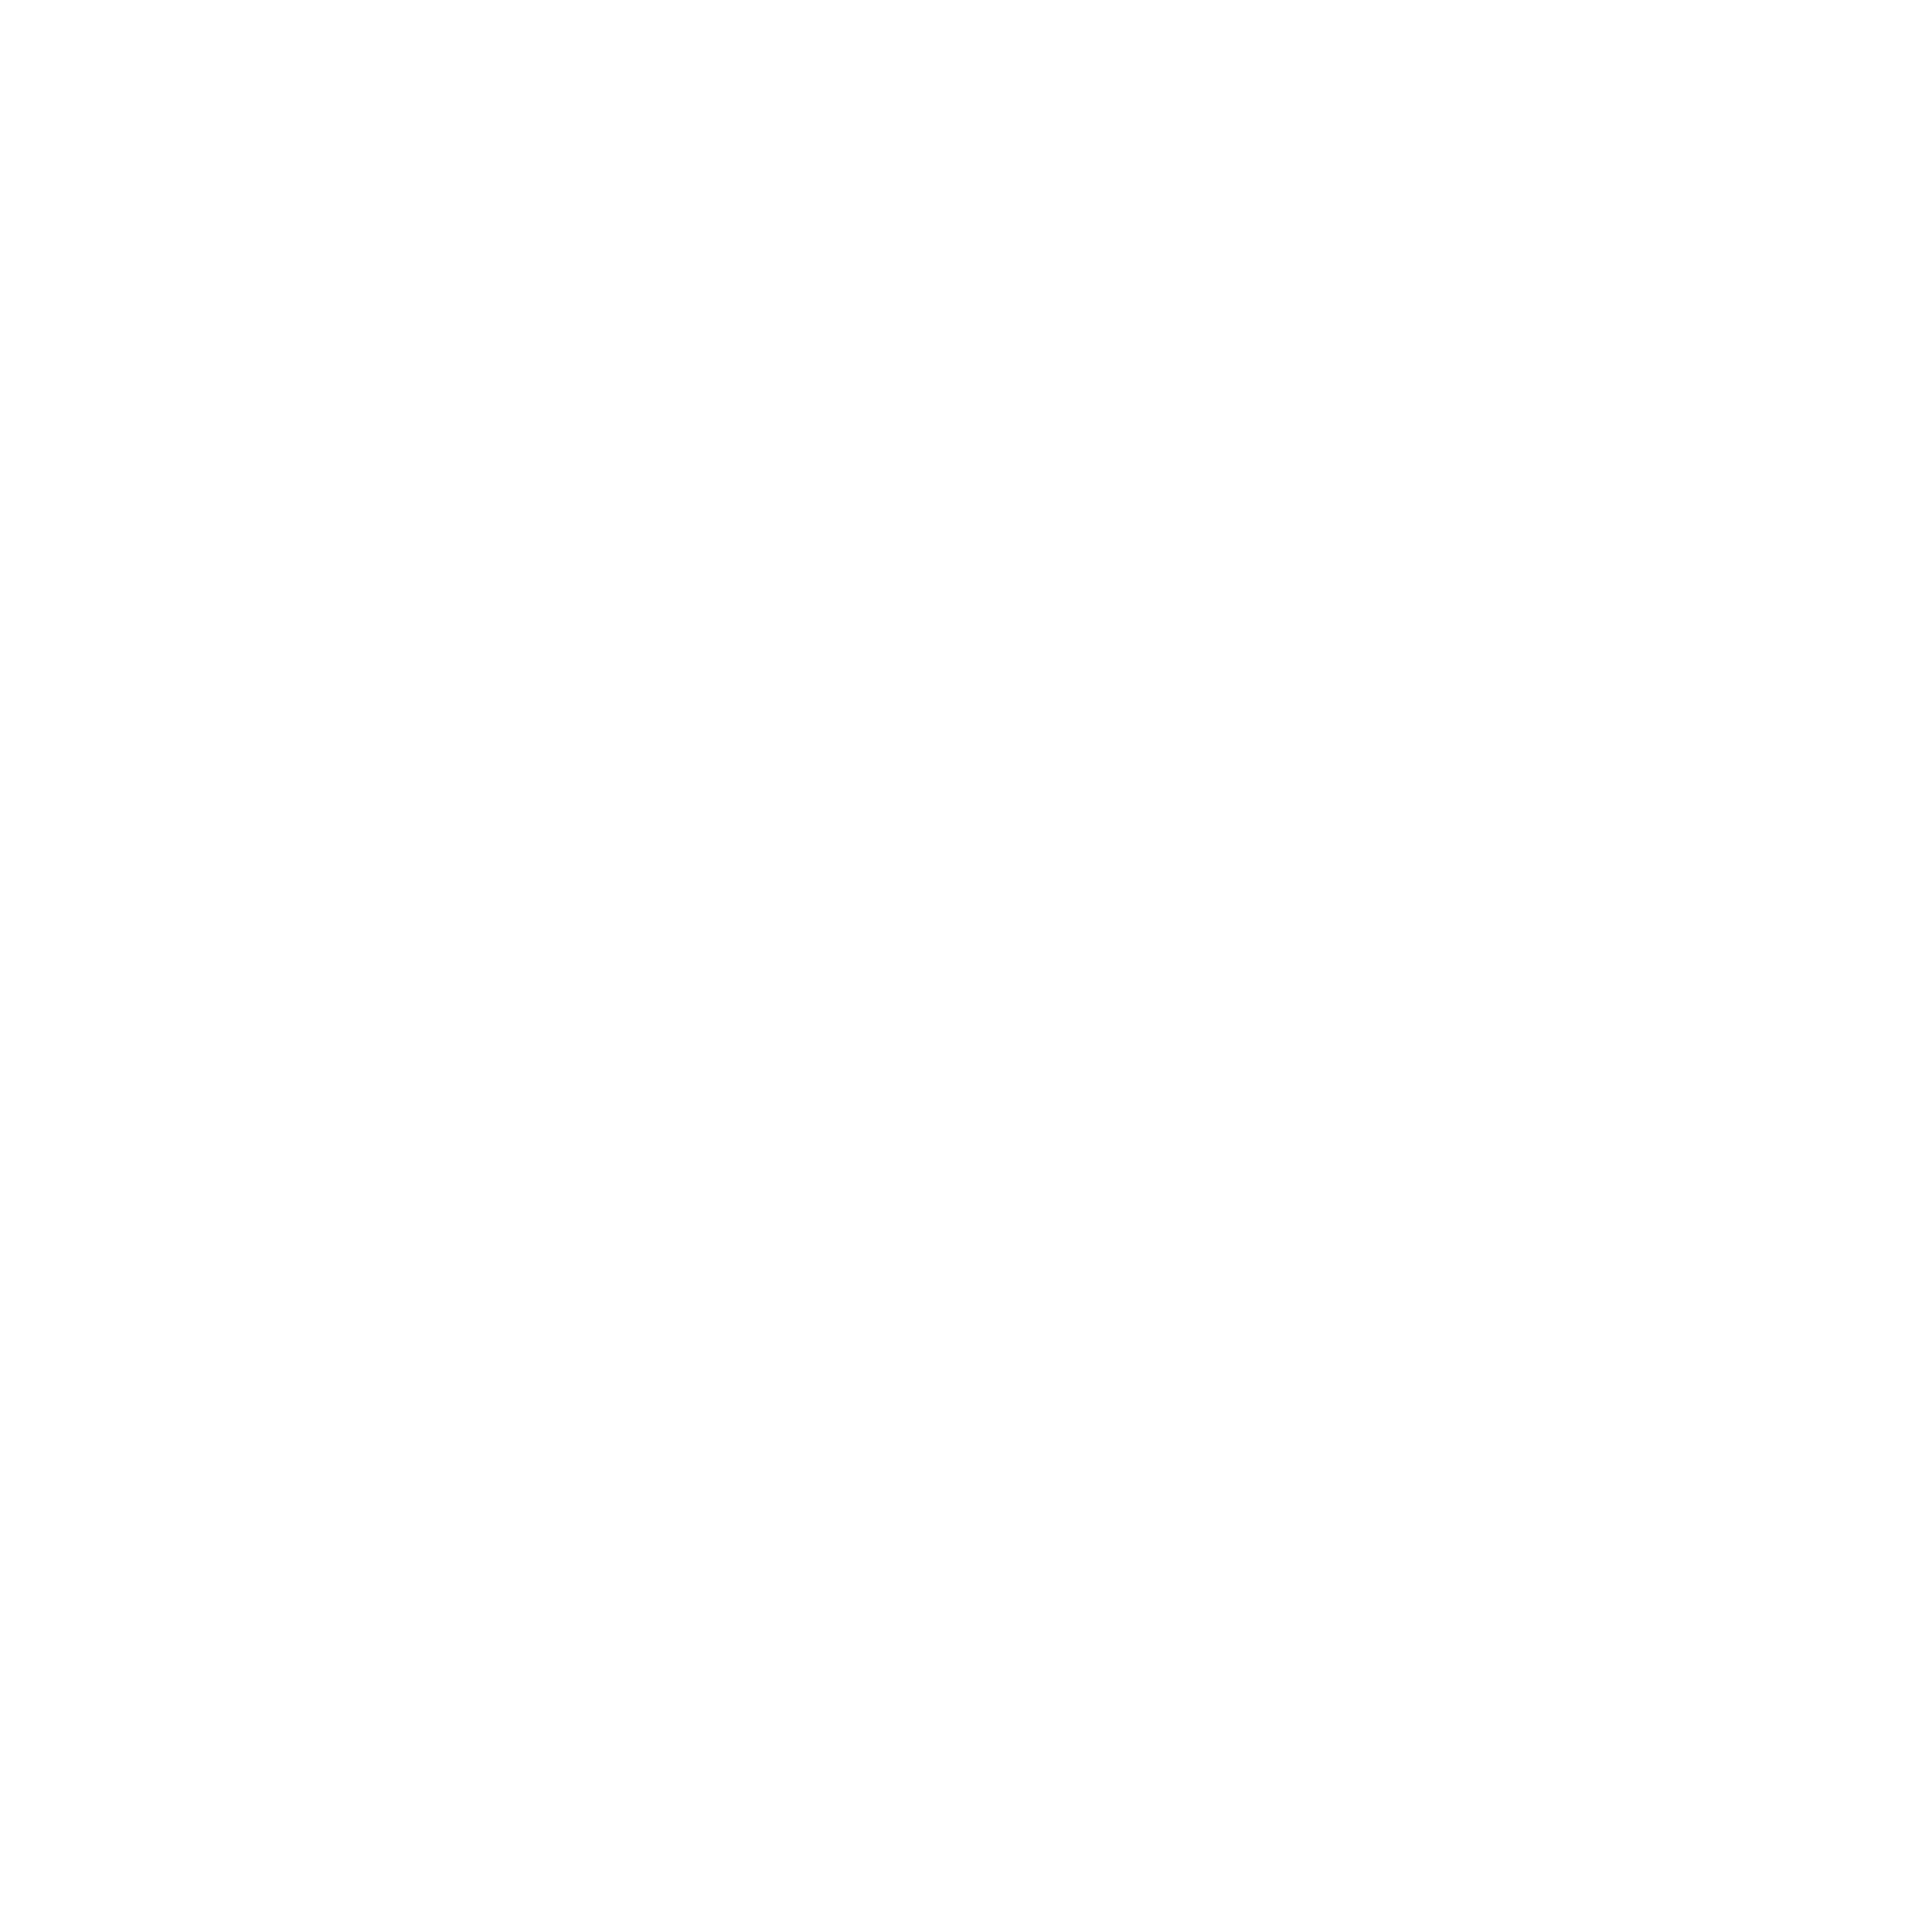 Jayspt logo wit